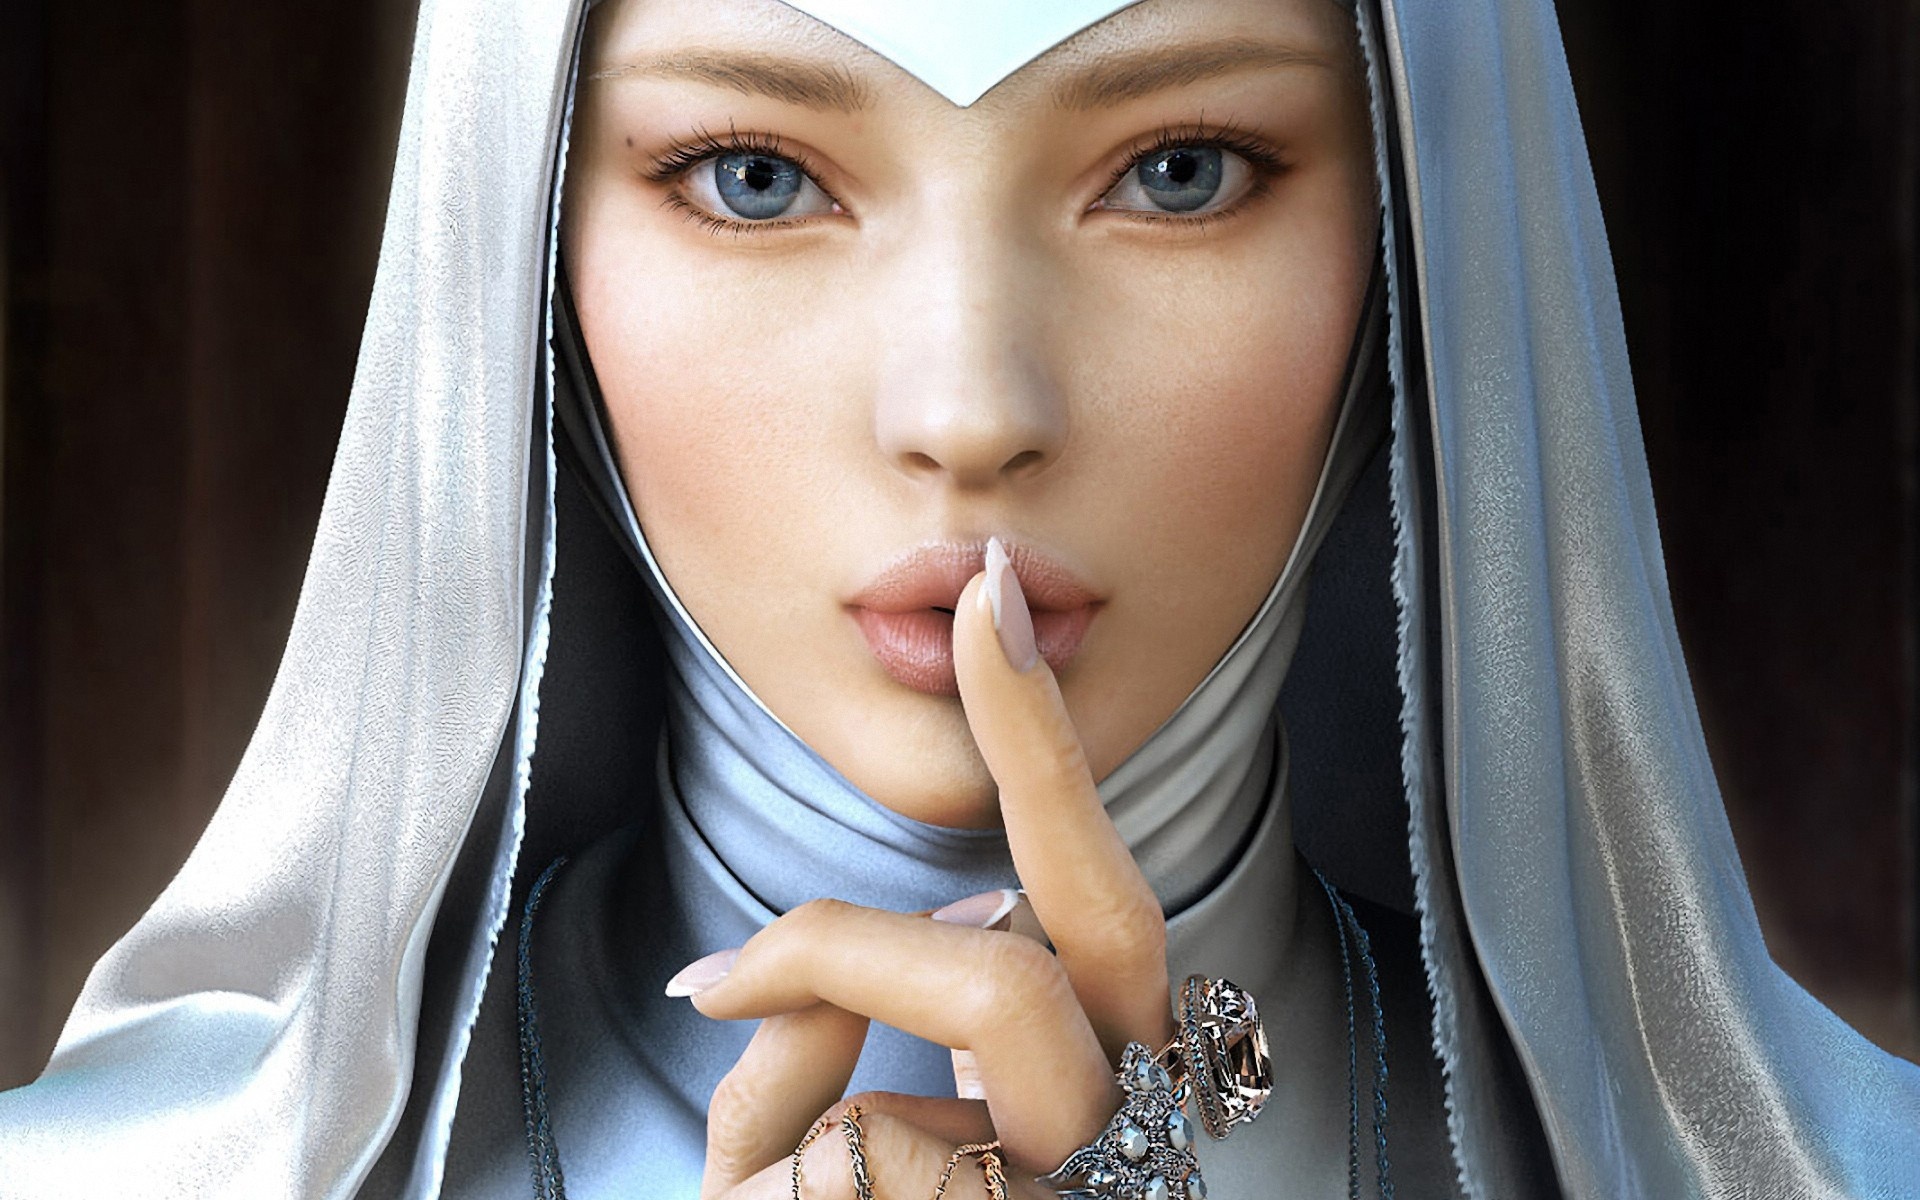 Catholic Fantasy Art Women HD Wallpaper